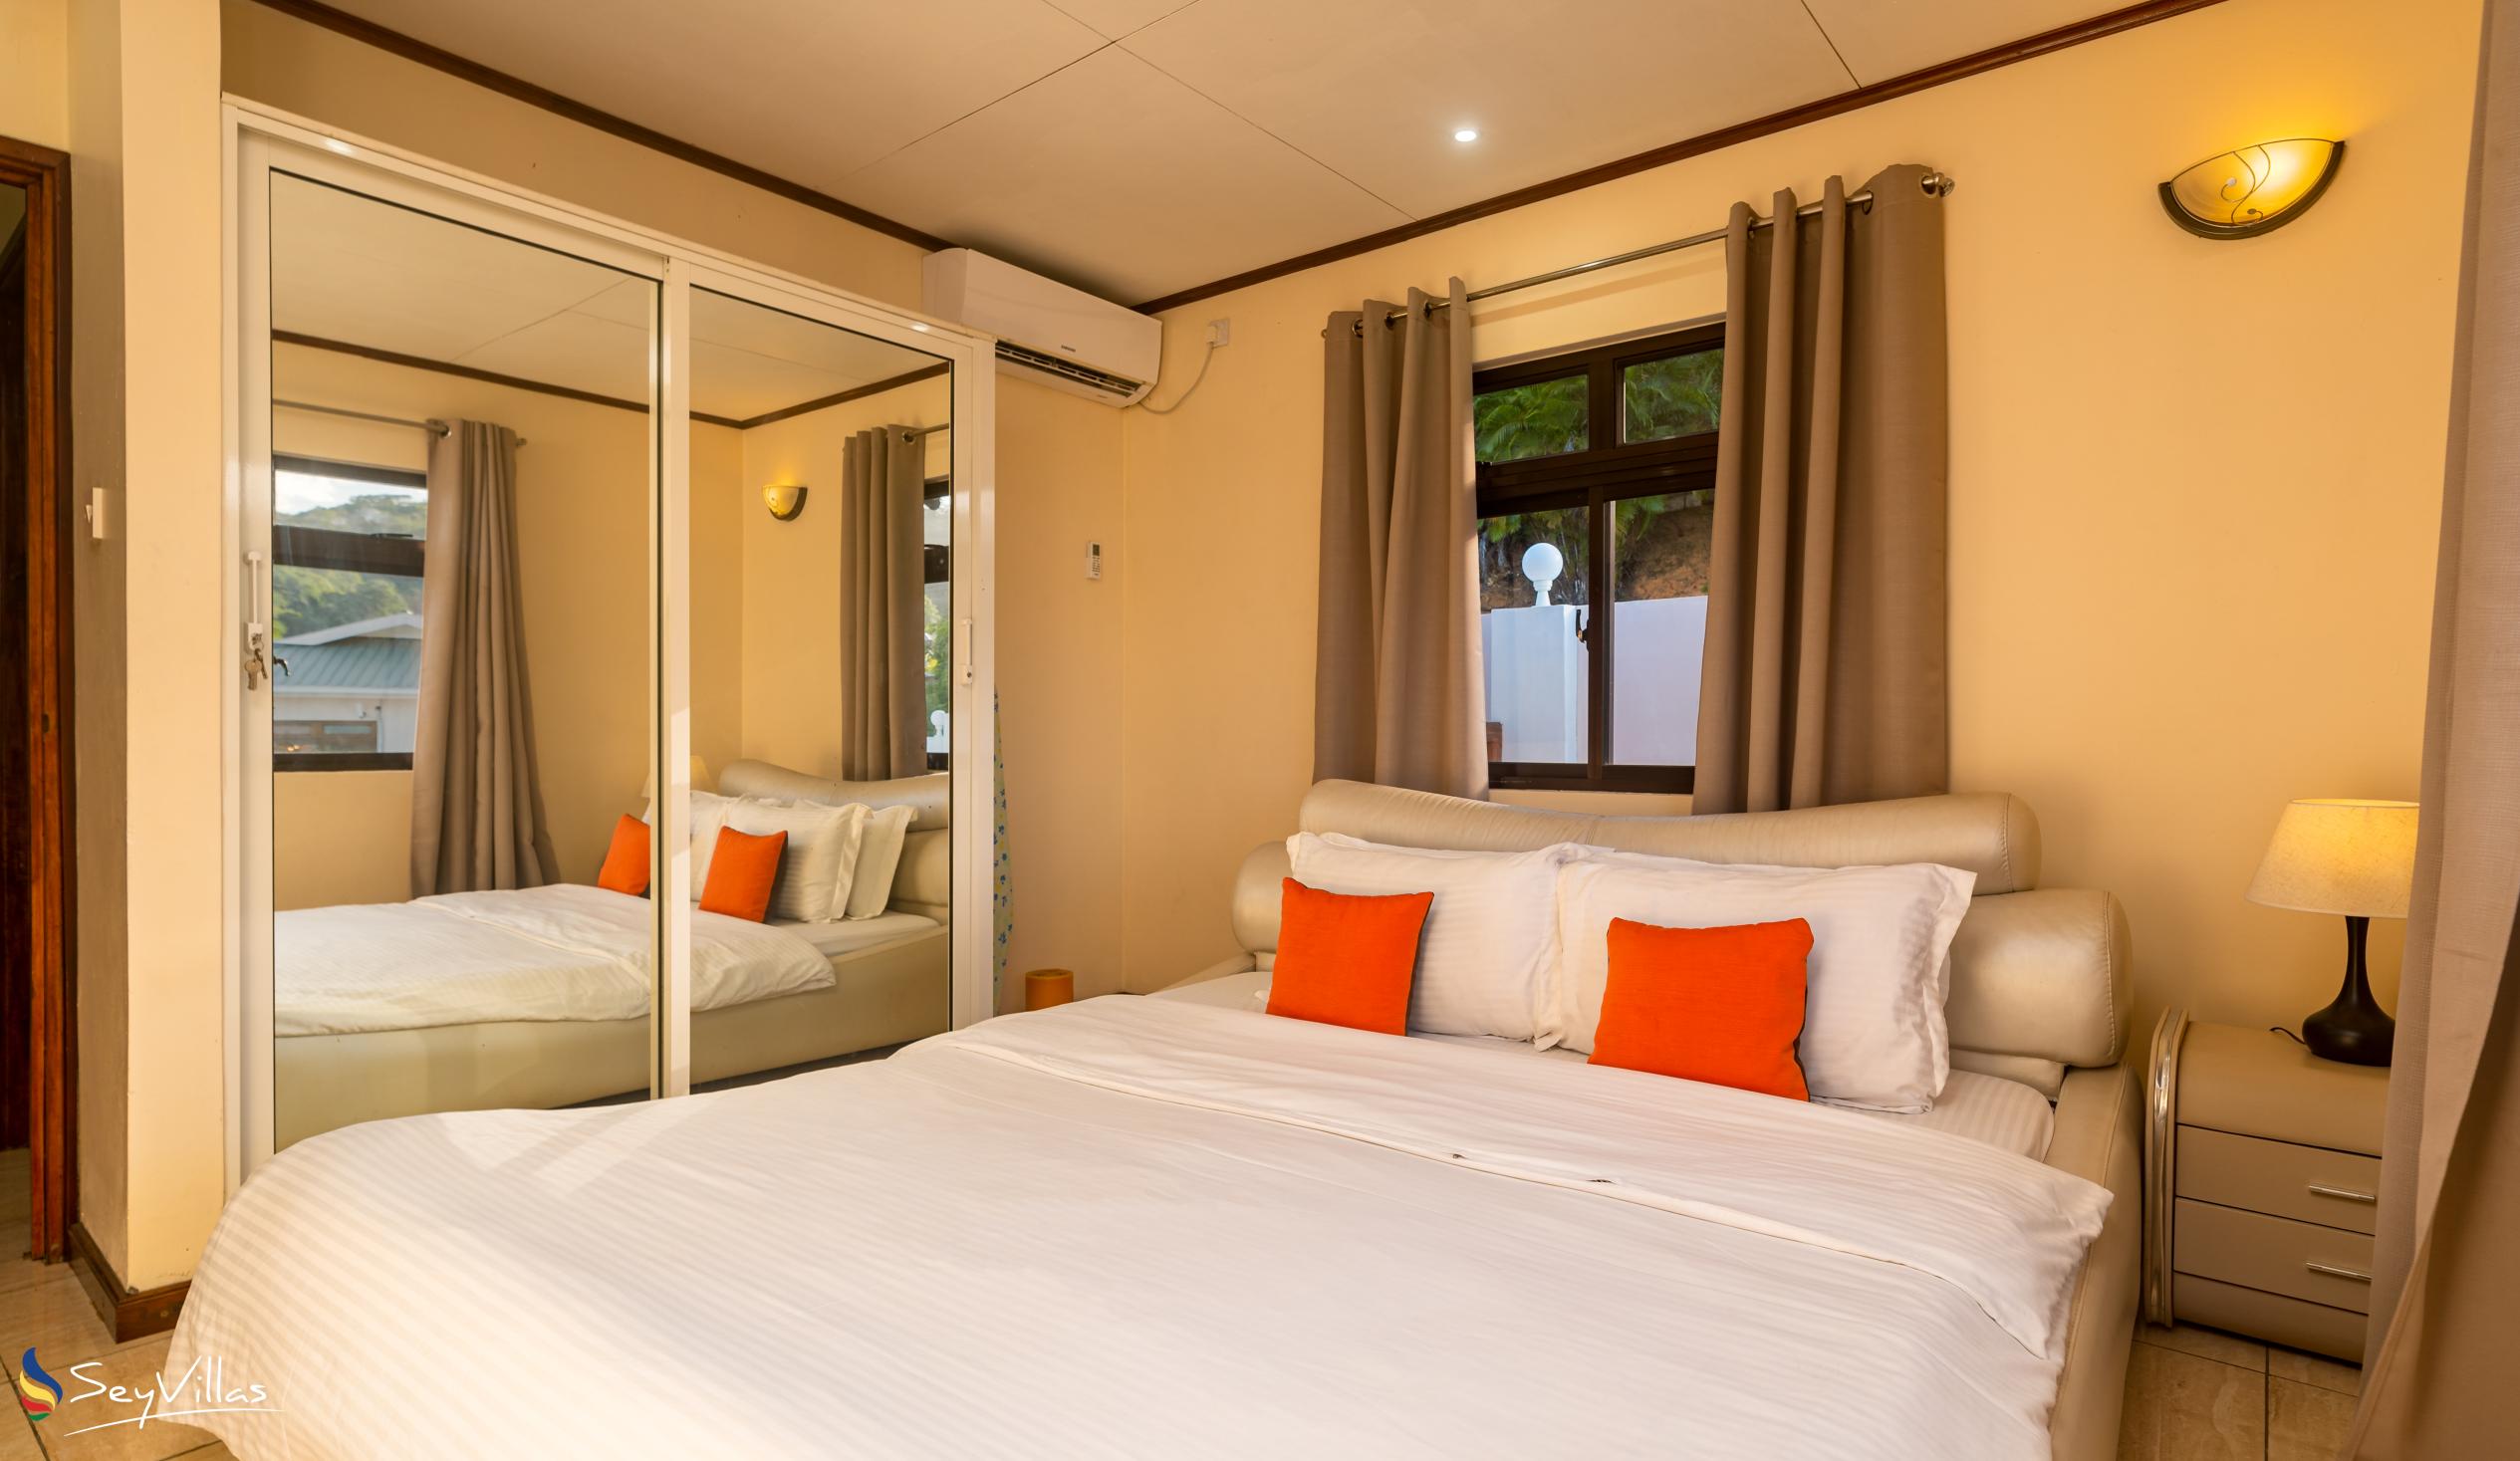 Photo 48: Maison L'Horizon - 2-Bedroom Apartment Soley - Mahé (Seychelles)